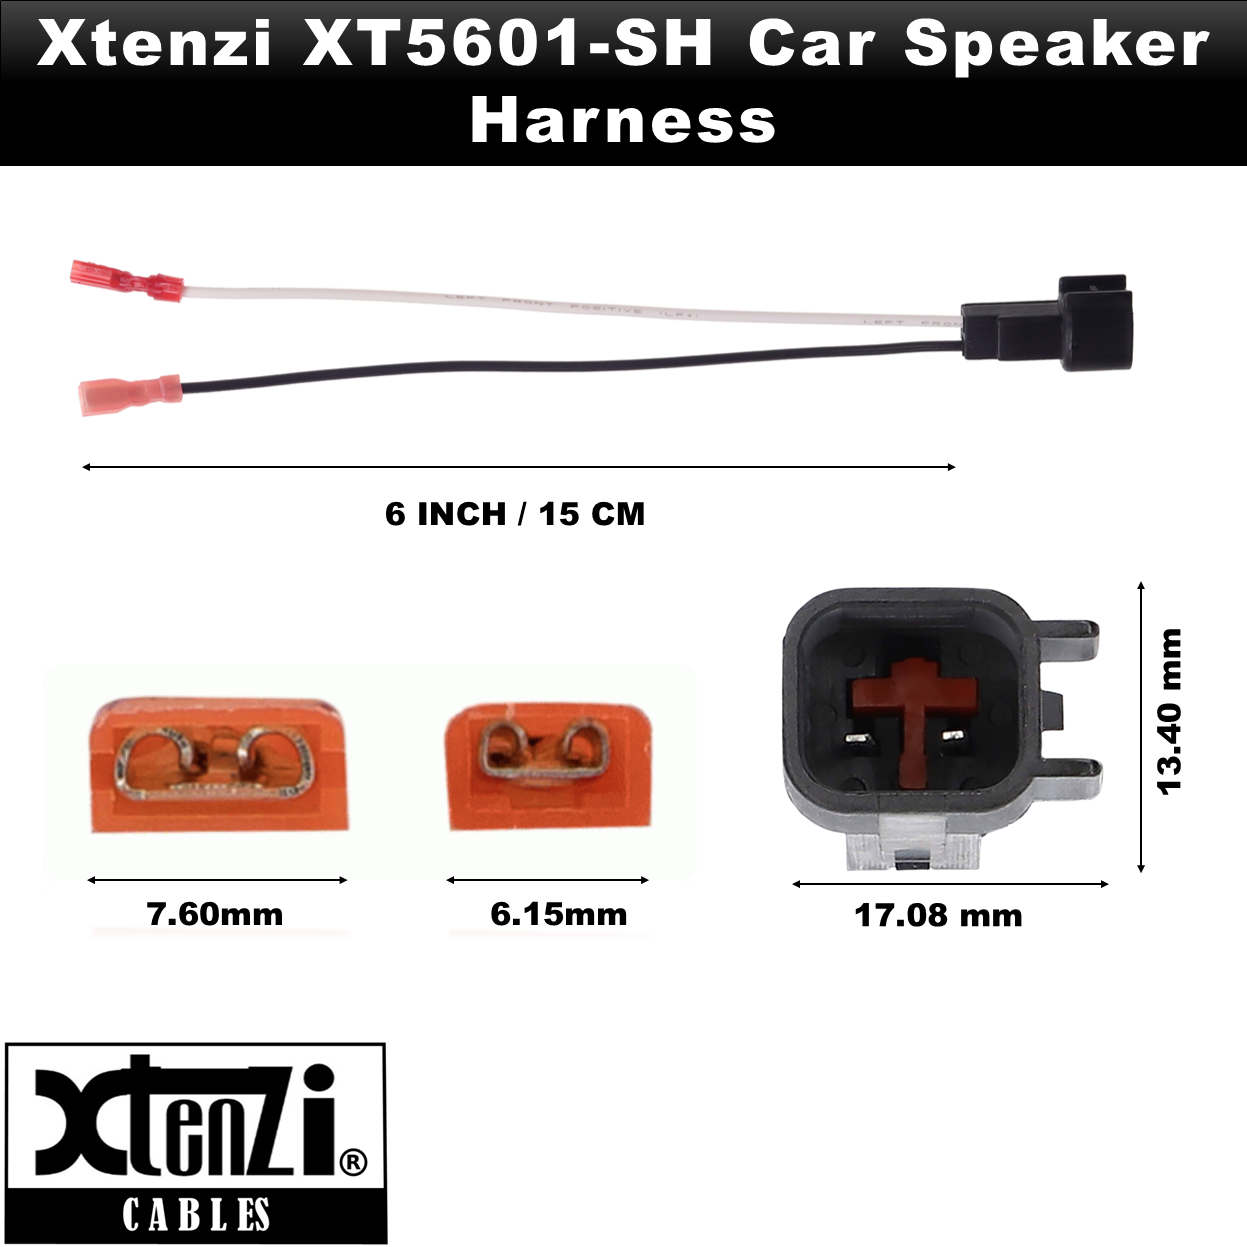 Xtenzi 2 Pair Car Audio Speaker Harness Set for Ford, GMC, Chevrolet Vehicles